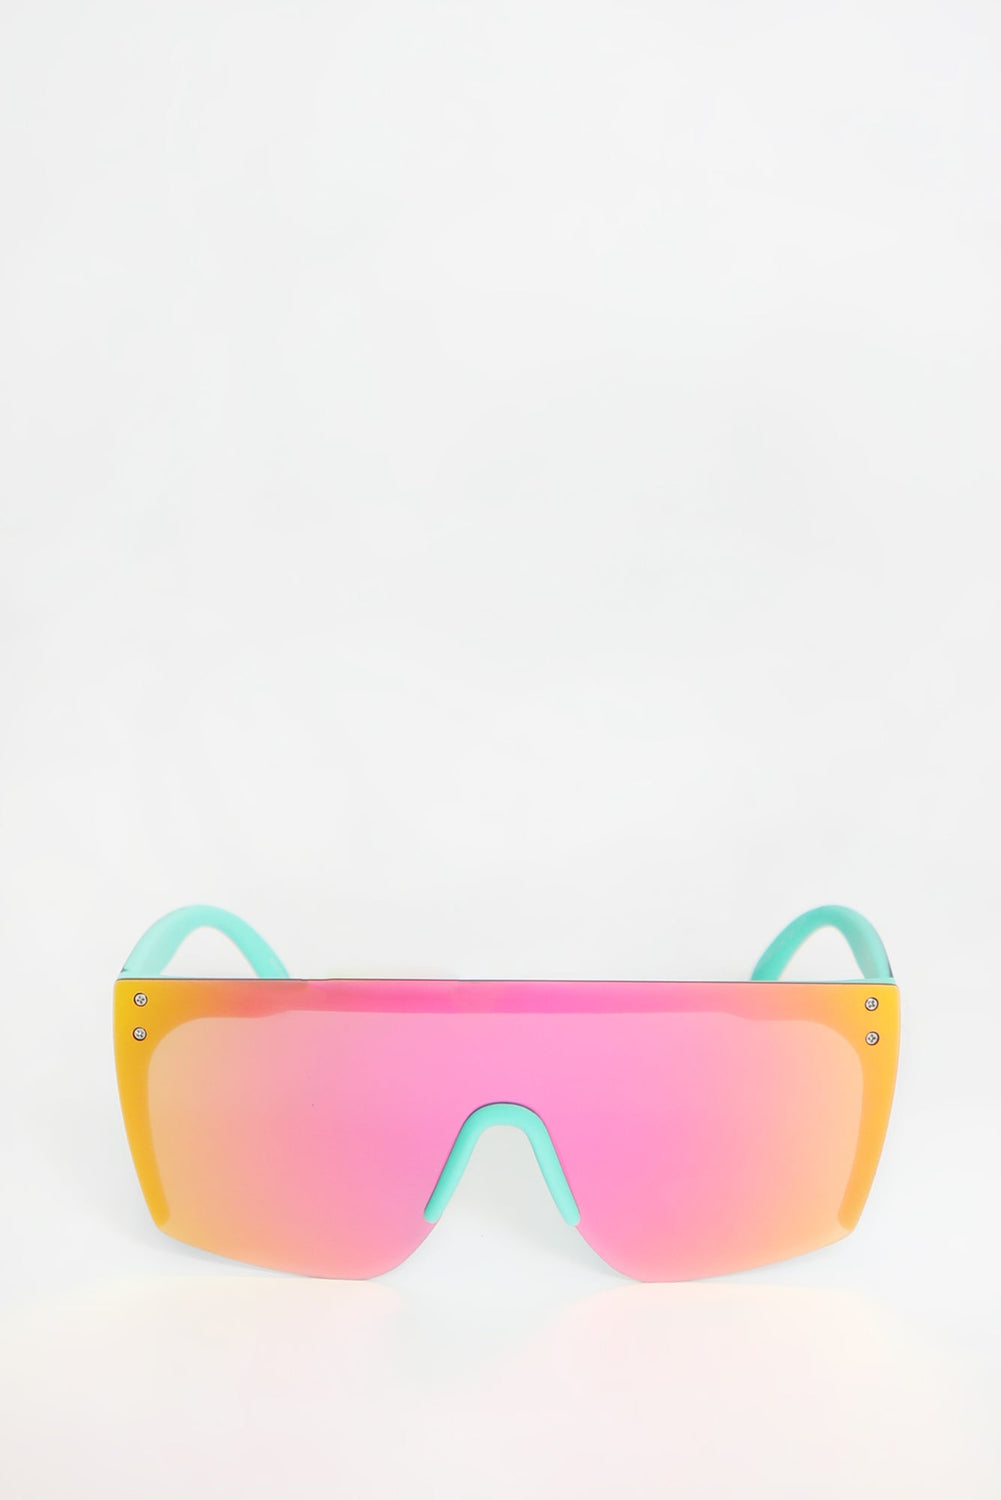 West49 Square Shield Sunglasses West49 Square Shield Sunglasses